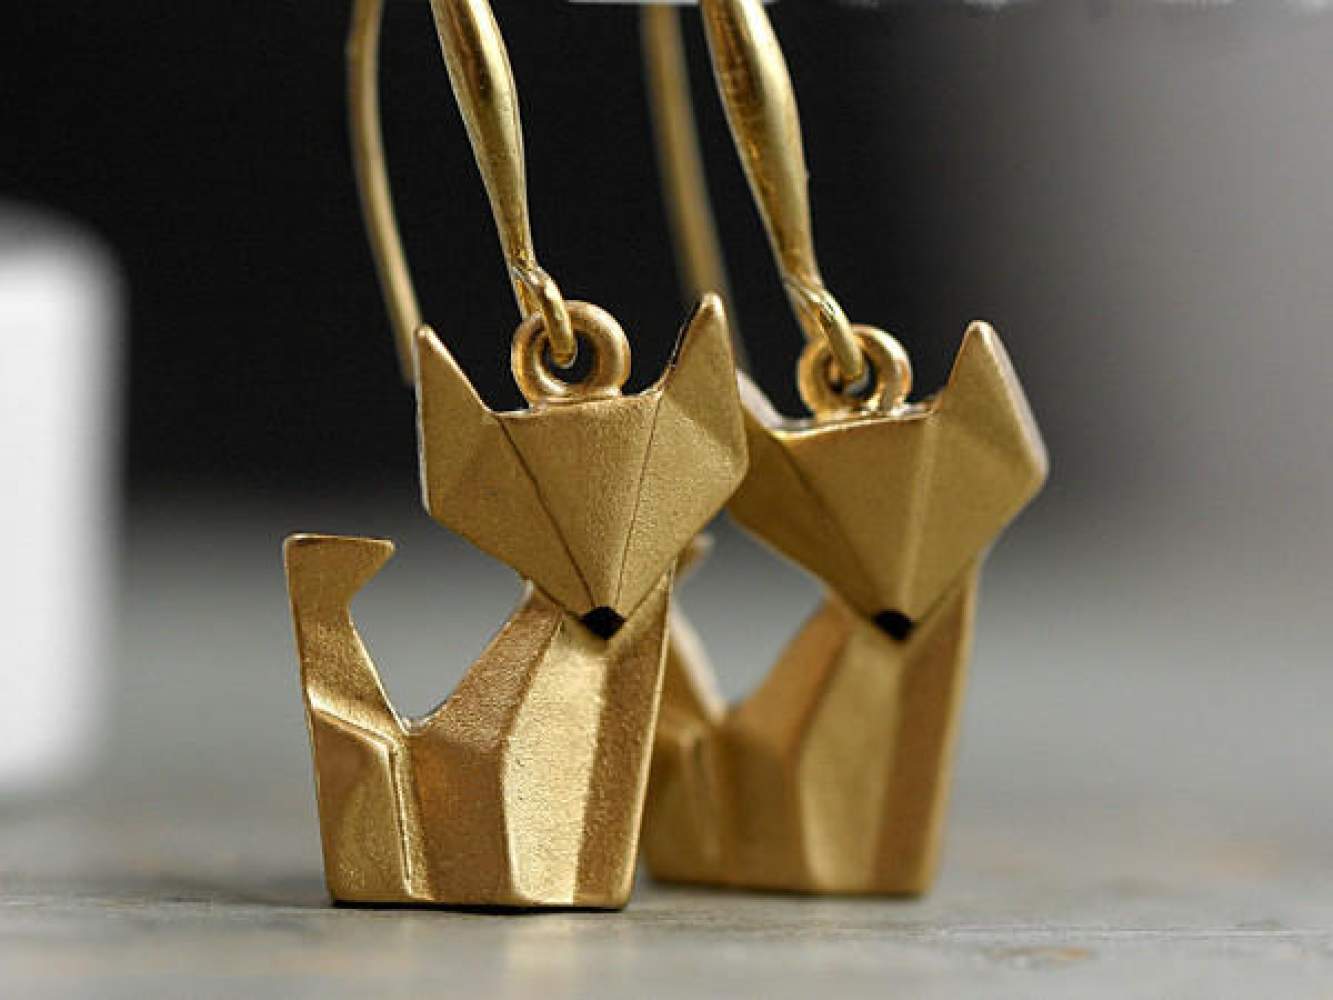 Handgilded Origami Fox Earrings